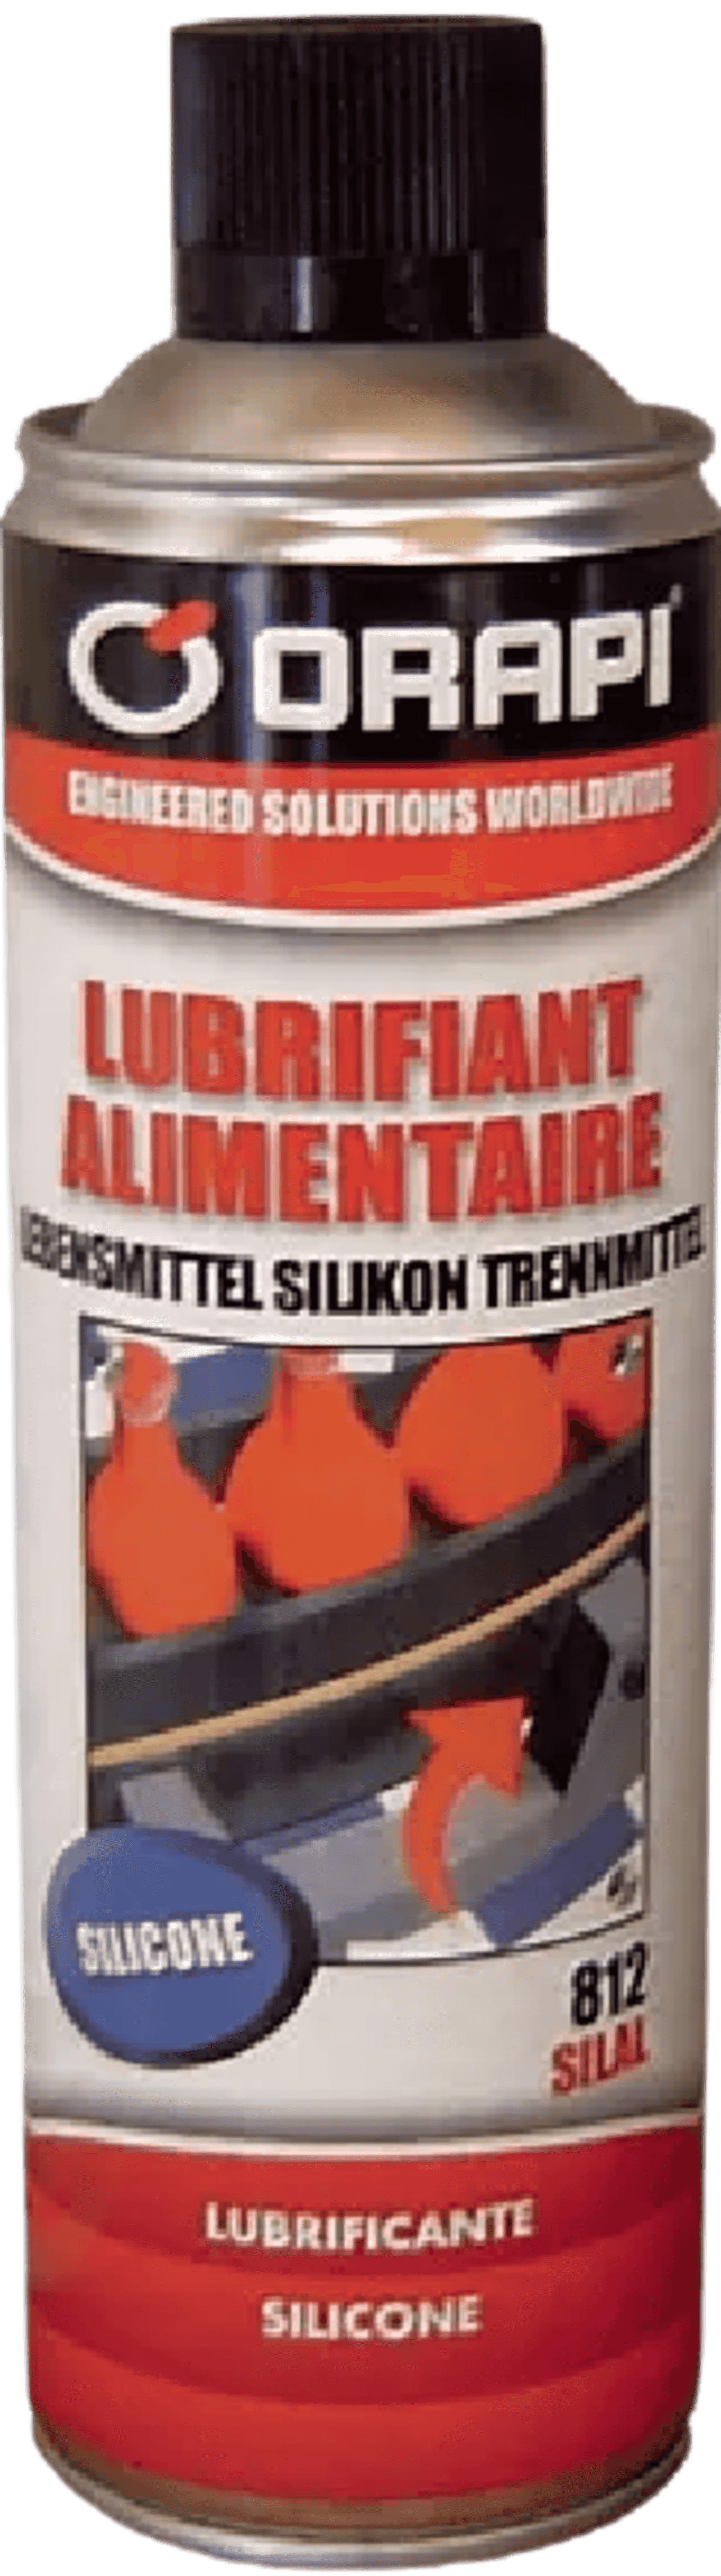 Silicone alimentaire pour lubrification 